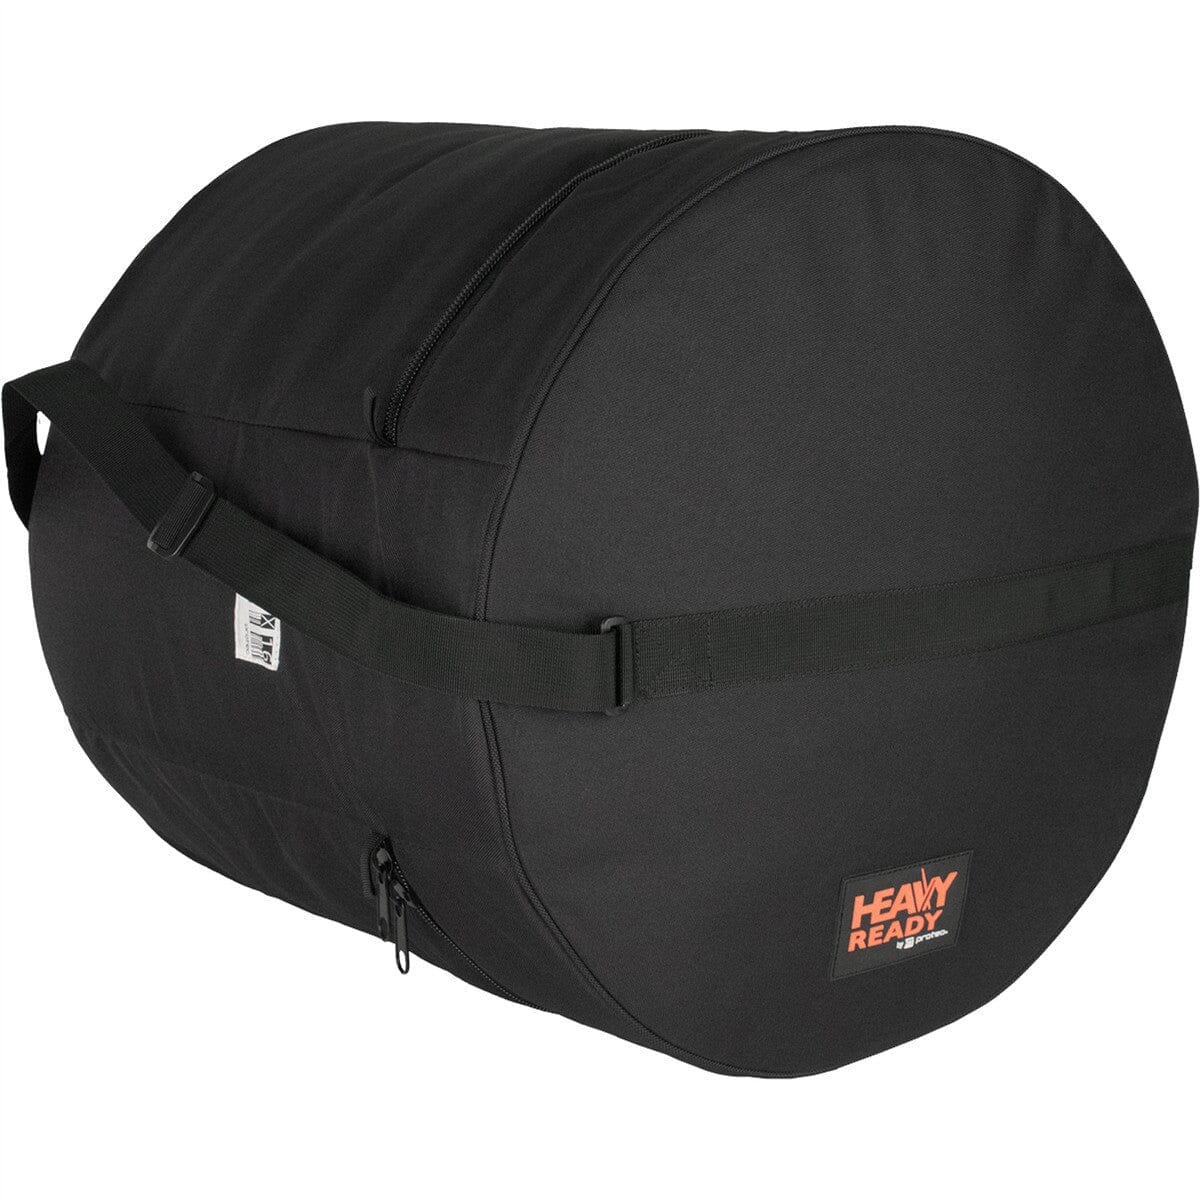 Protec Heavy Ready Series Drum Bag, Tom 16"H x 16"D (HR1616) NEW CASES Protec 